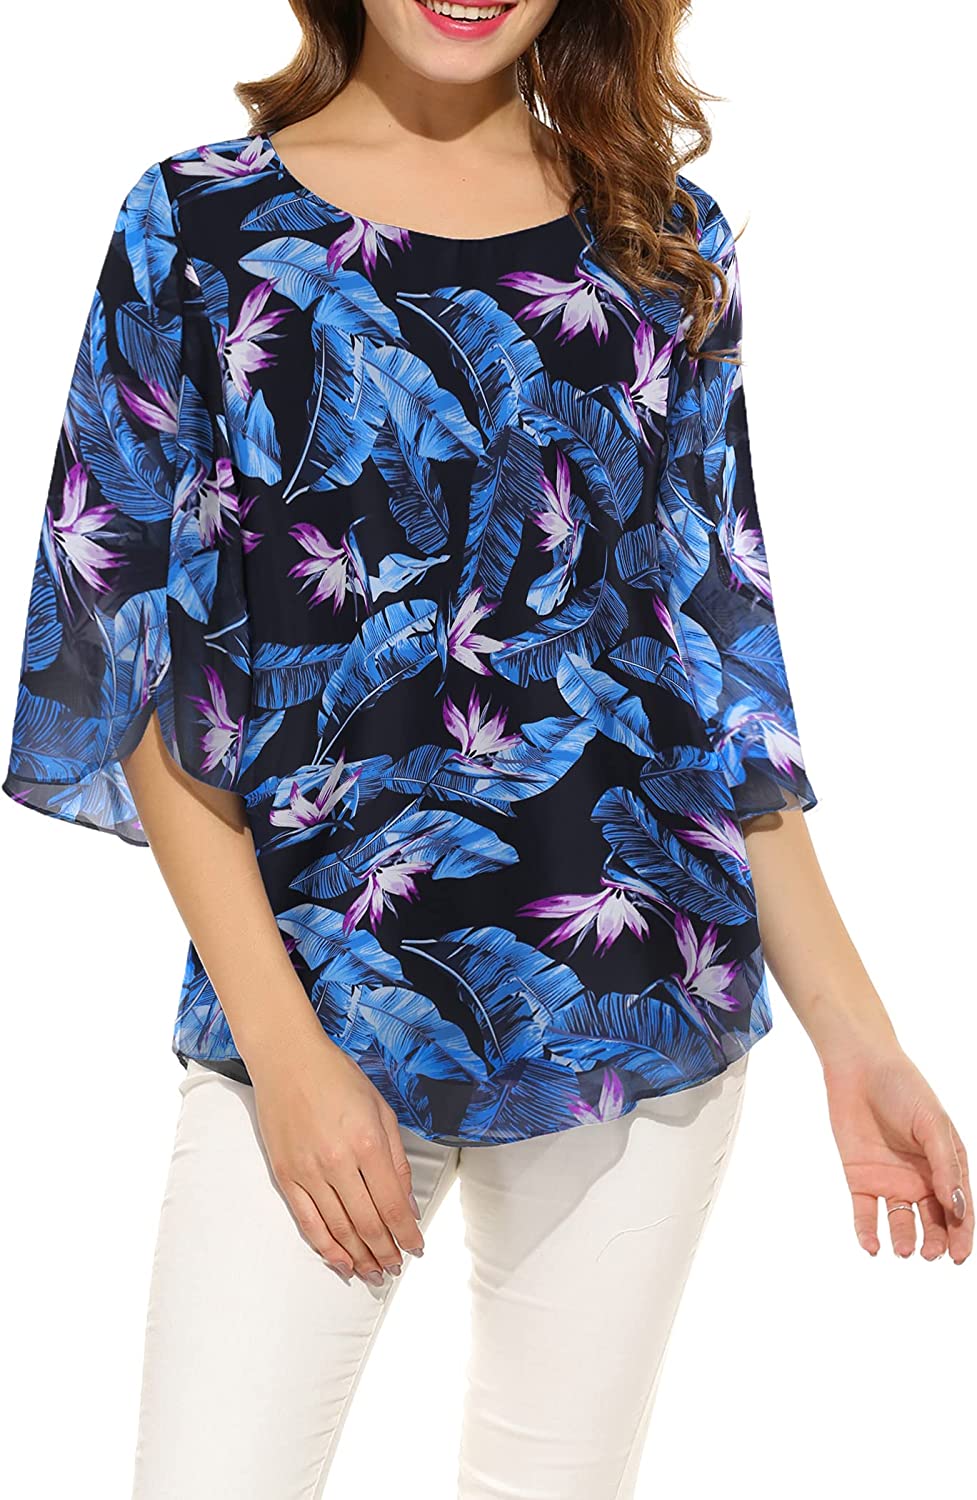 ACEVOG Womens Casual Scoop Neck Loose Top 3/4 Sleeve Chiffon Blouse Shirt  Tops